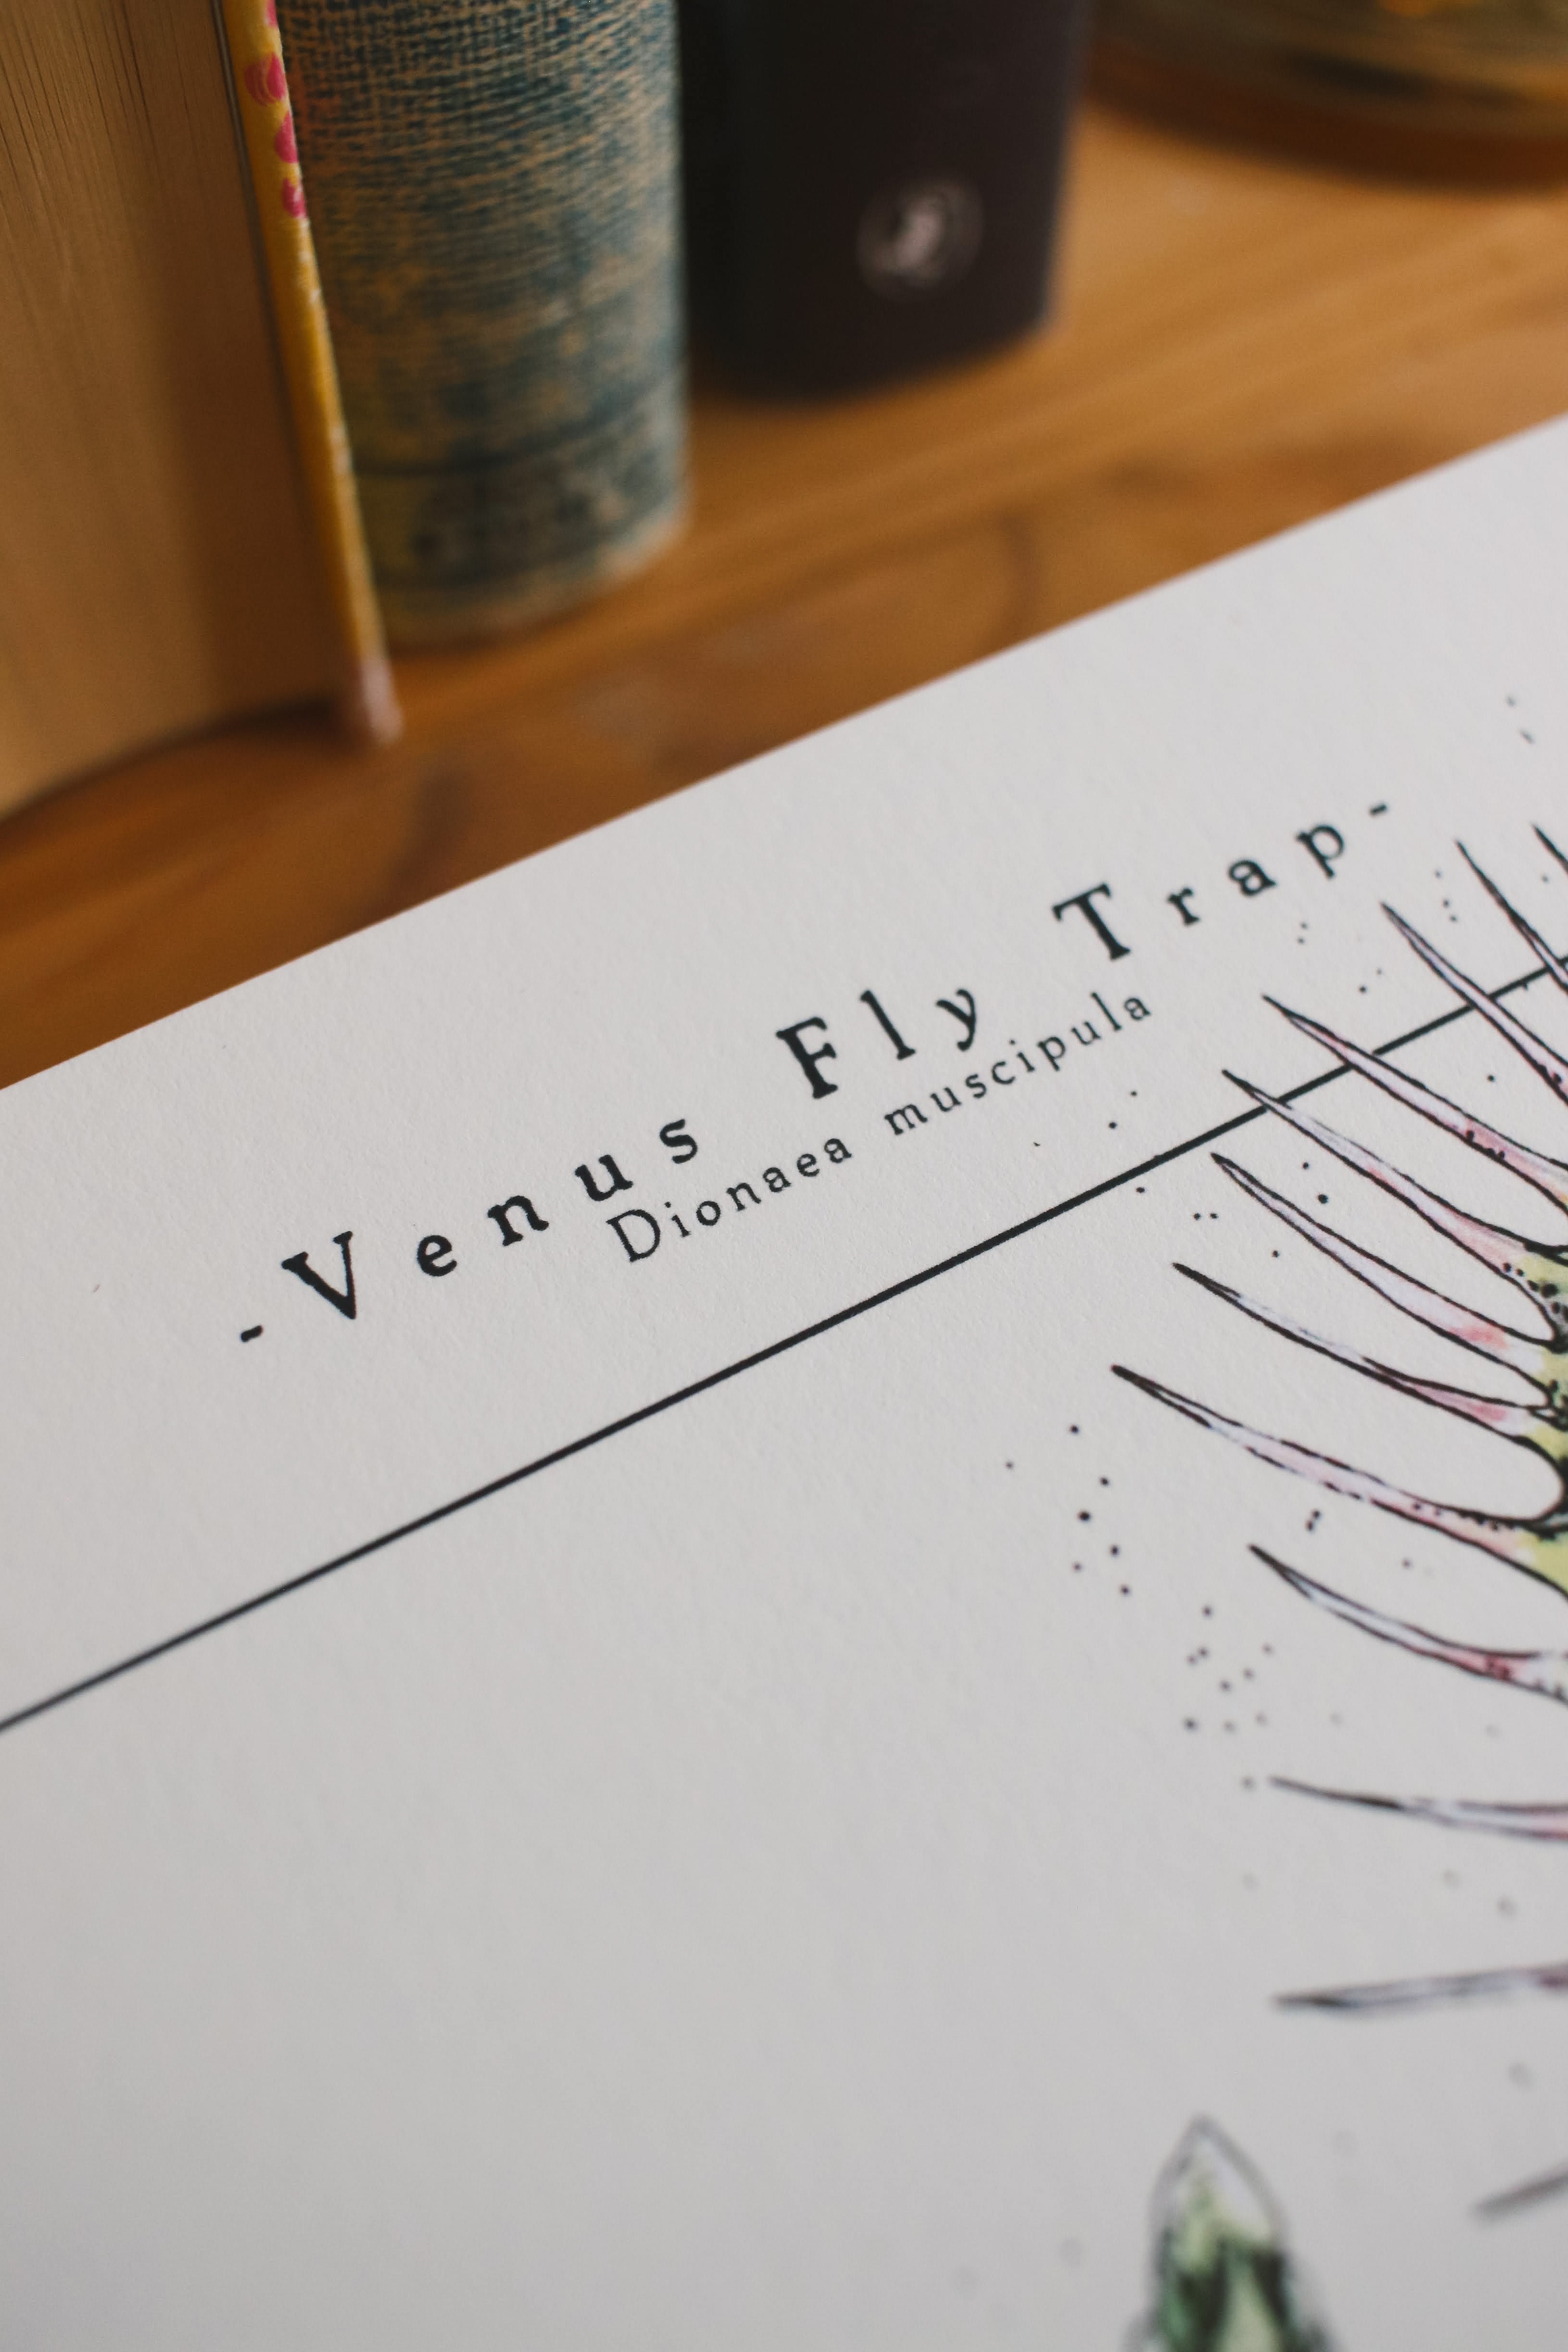 Venus Fly Trap - Houseplant Infographic